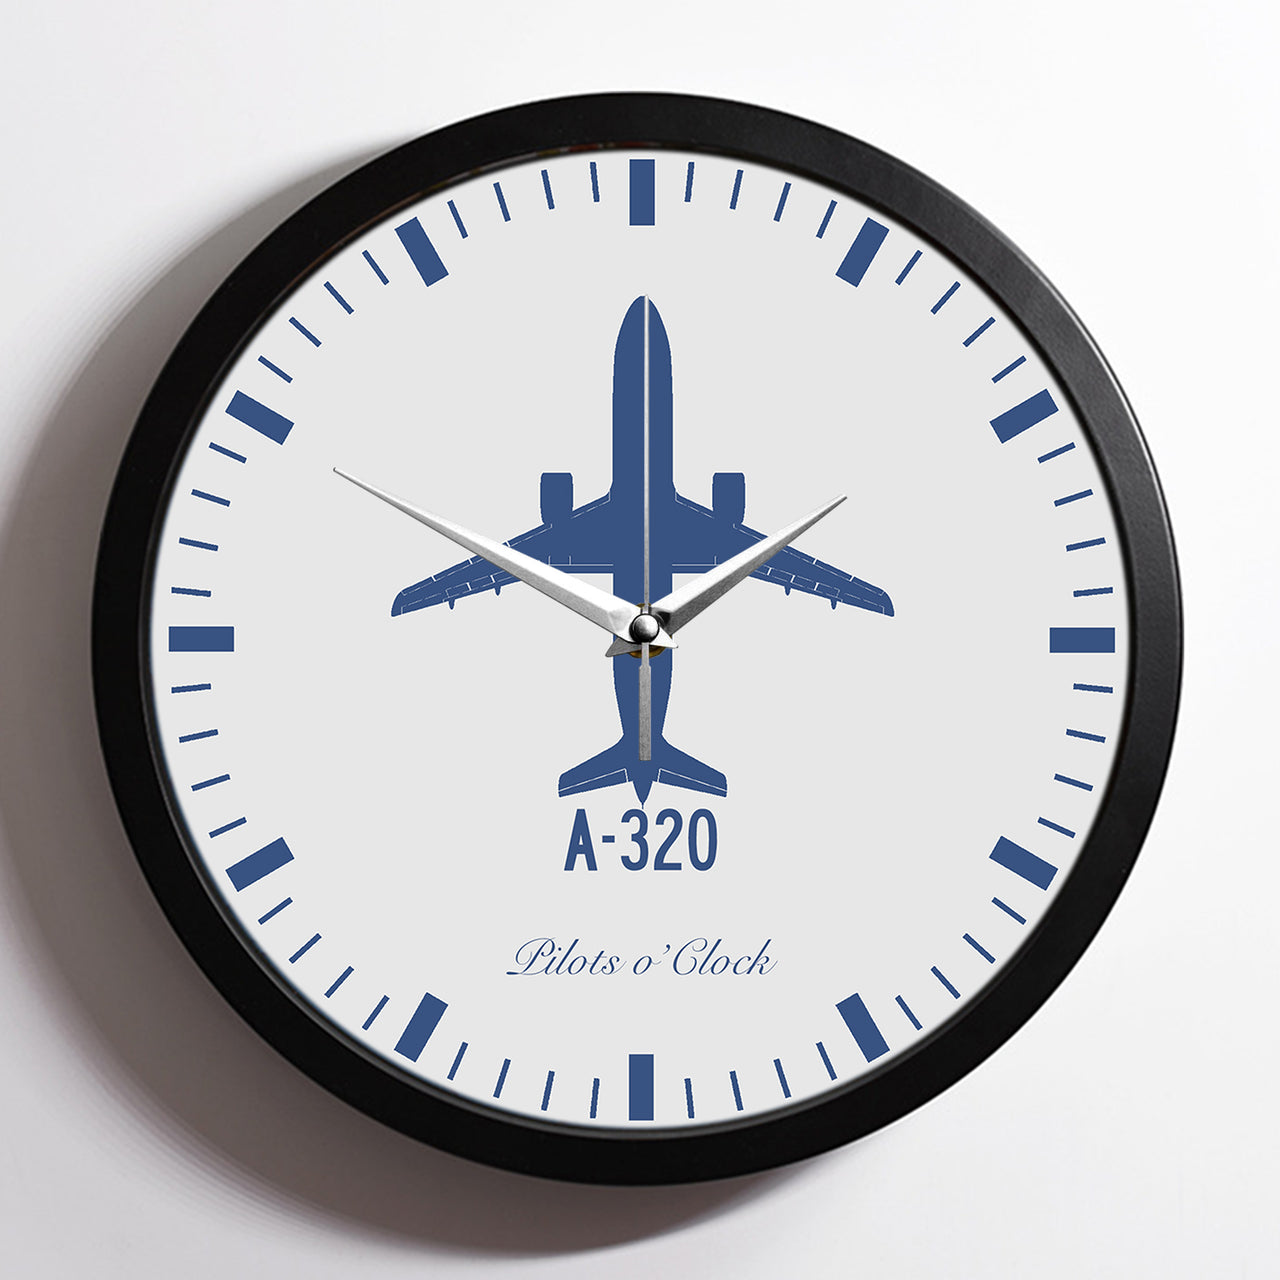 Airbus A320 Designed Wall Clocks